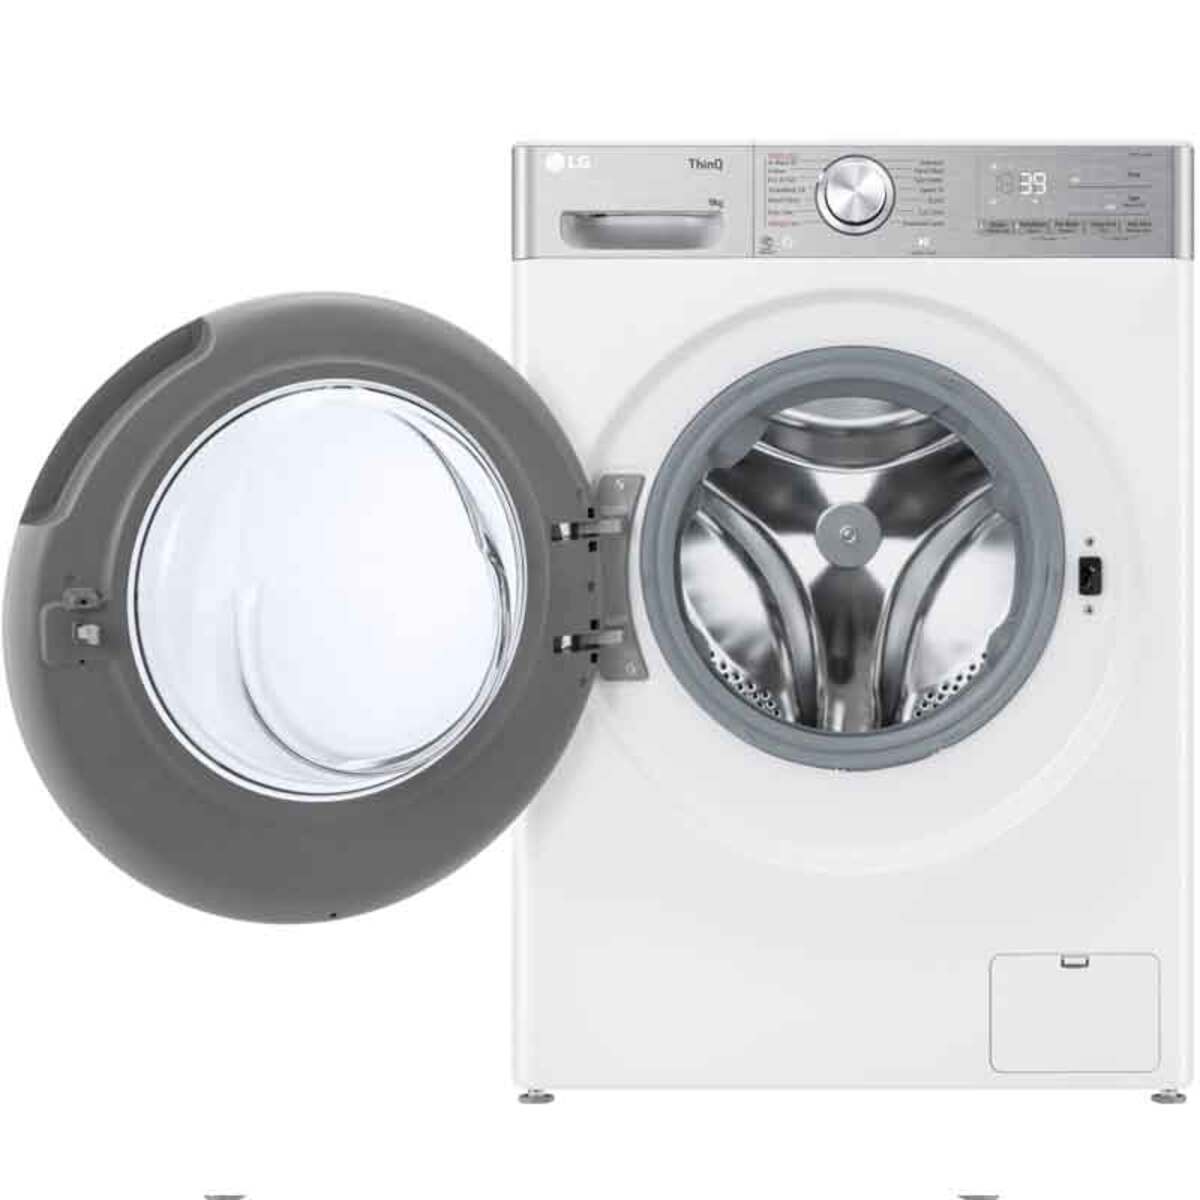 LG F4Y909WCTN4 A Rated 9kg Washing Machine, White